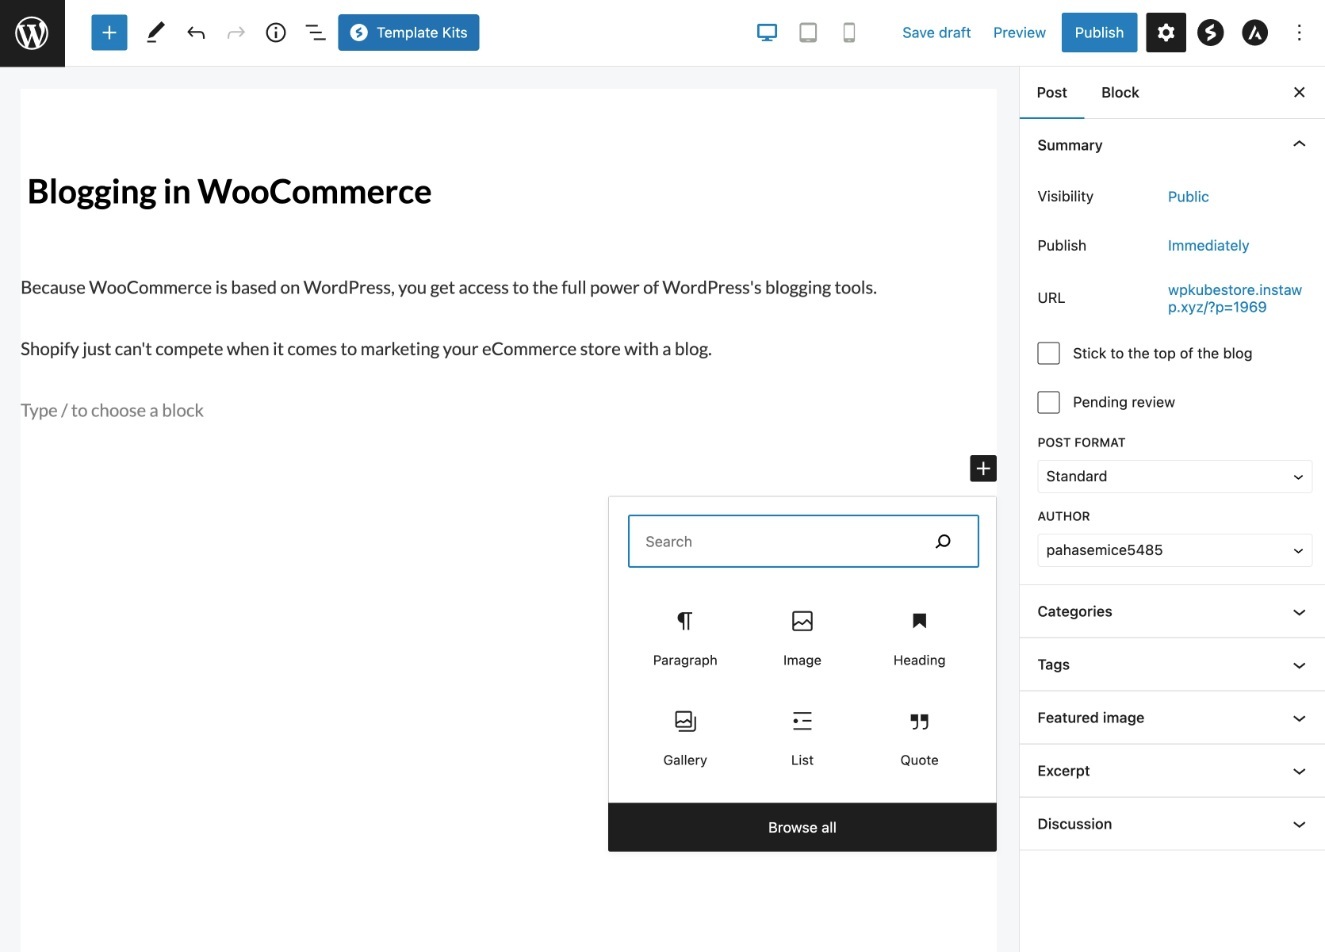 WooCommerce blogging functionality vs Shopify